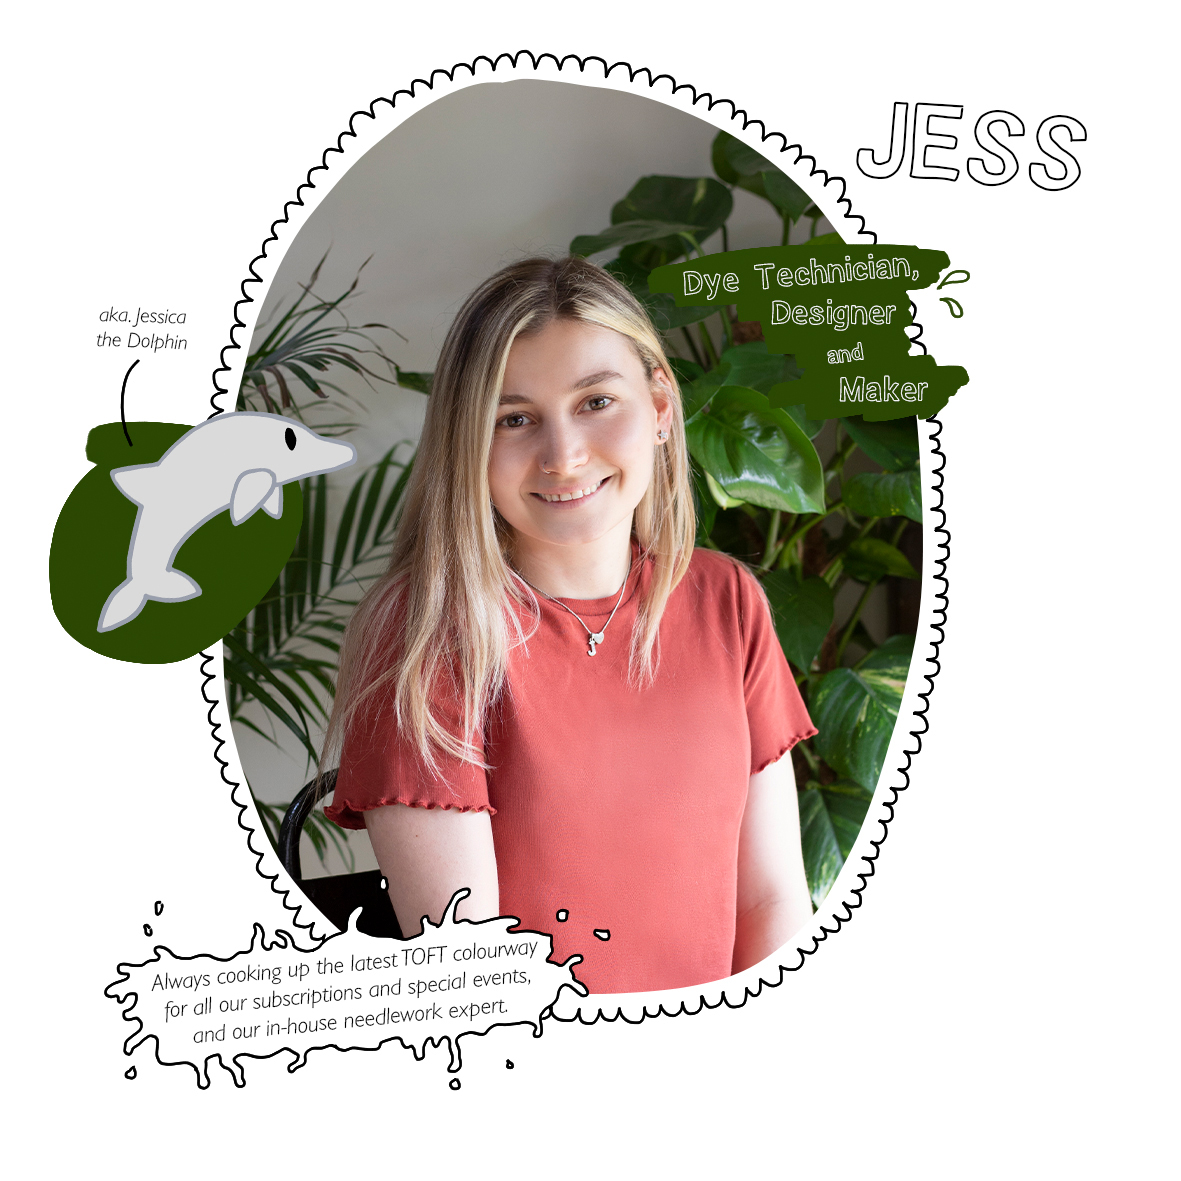 Jess: Designer, Maker and Dye Technician